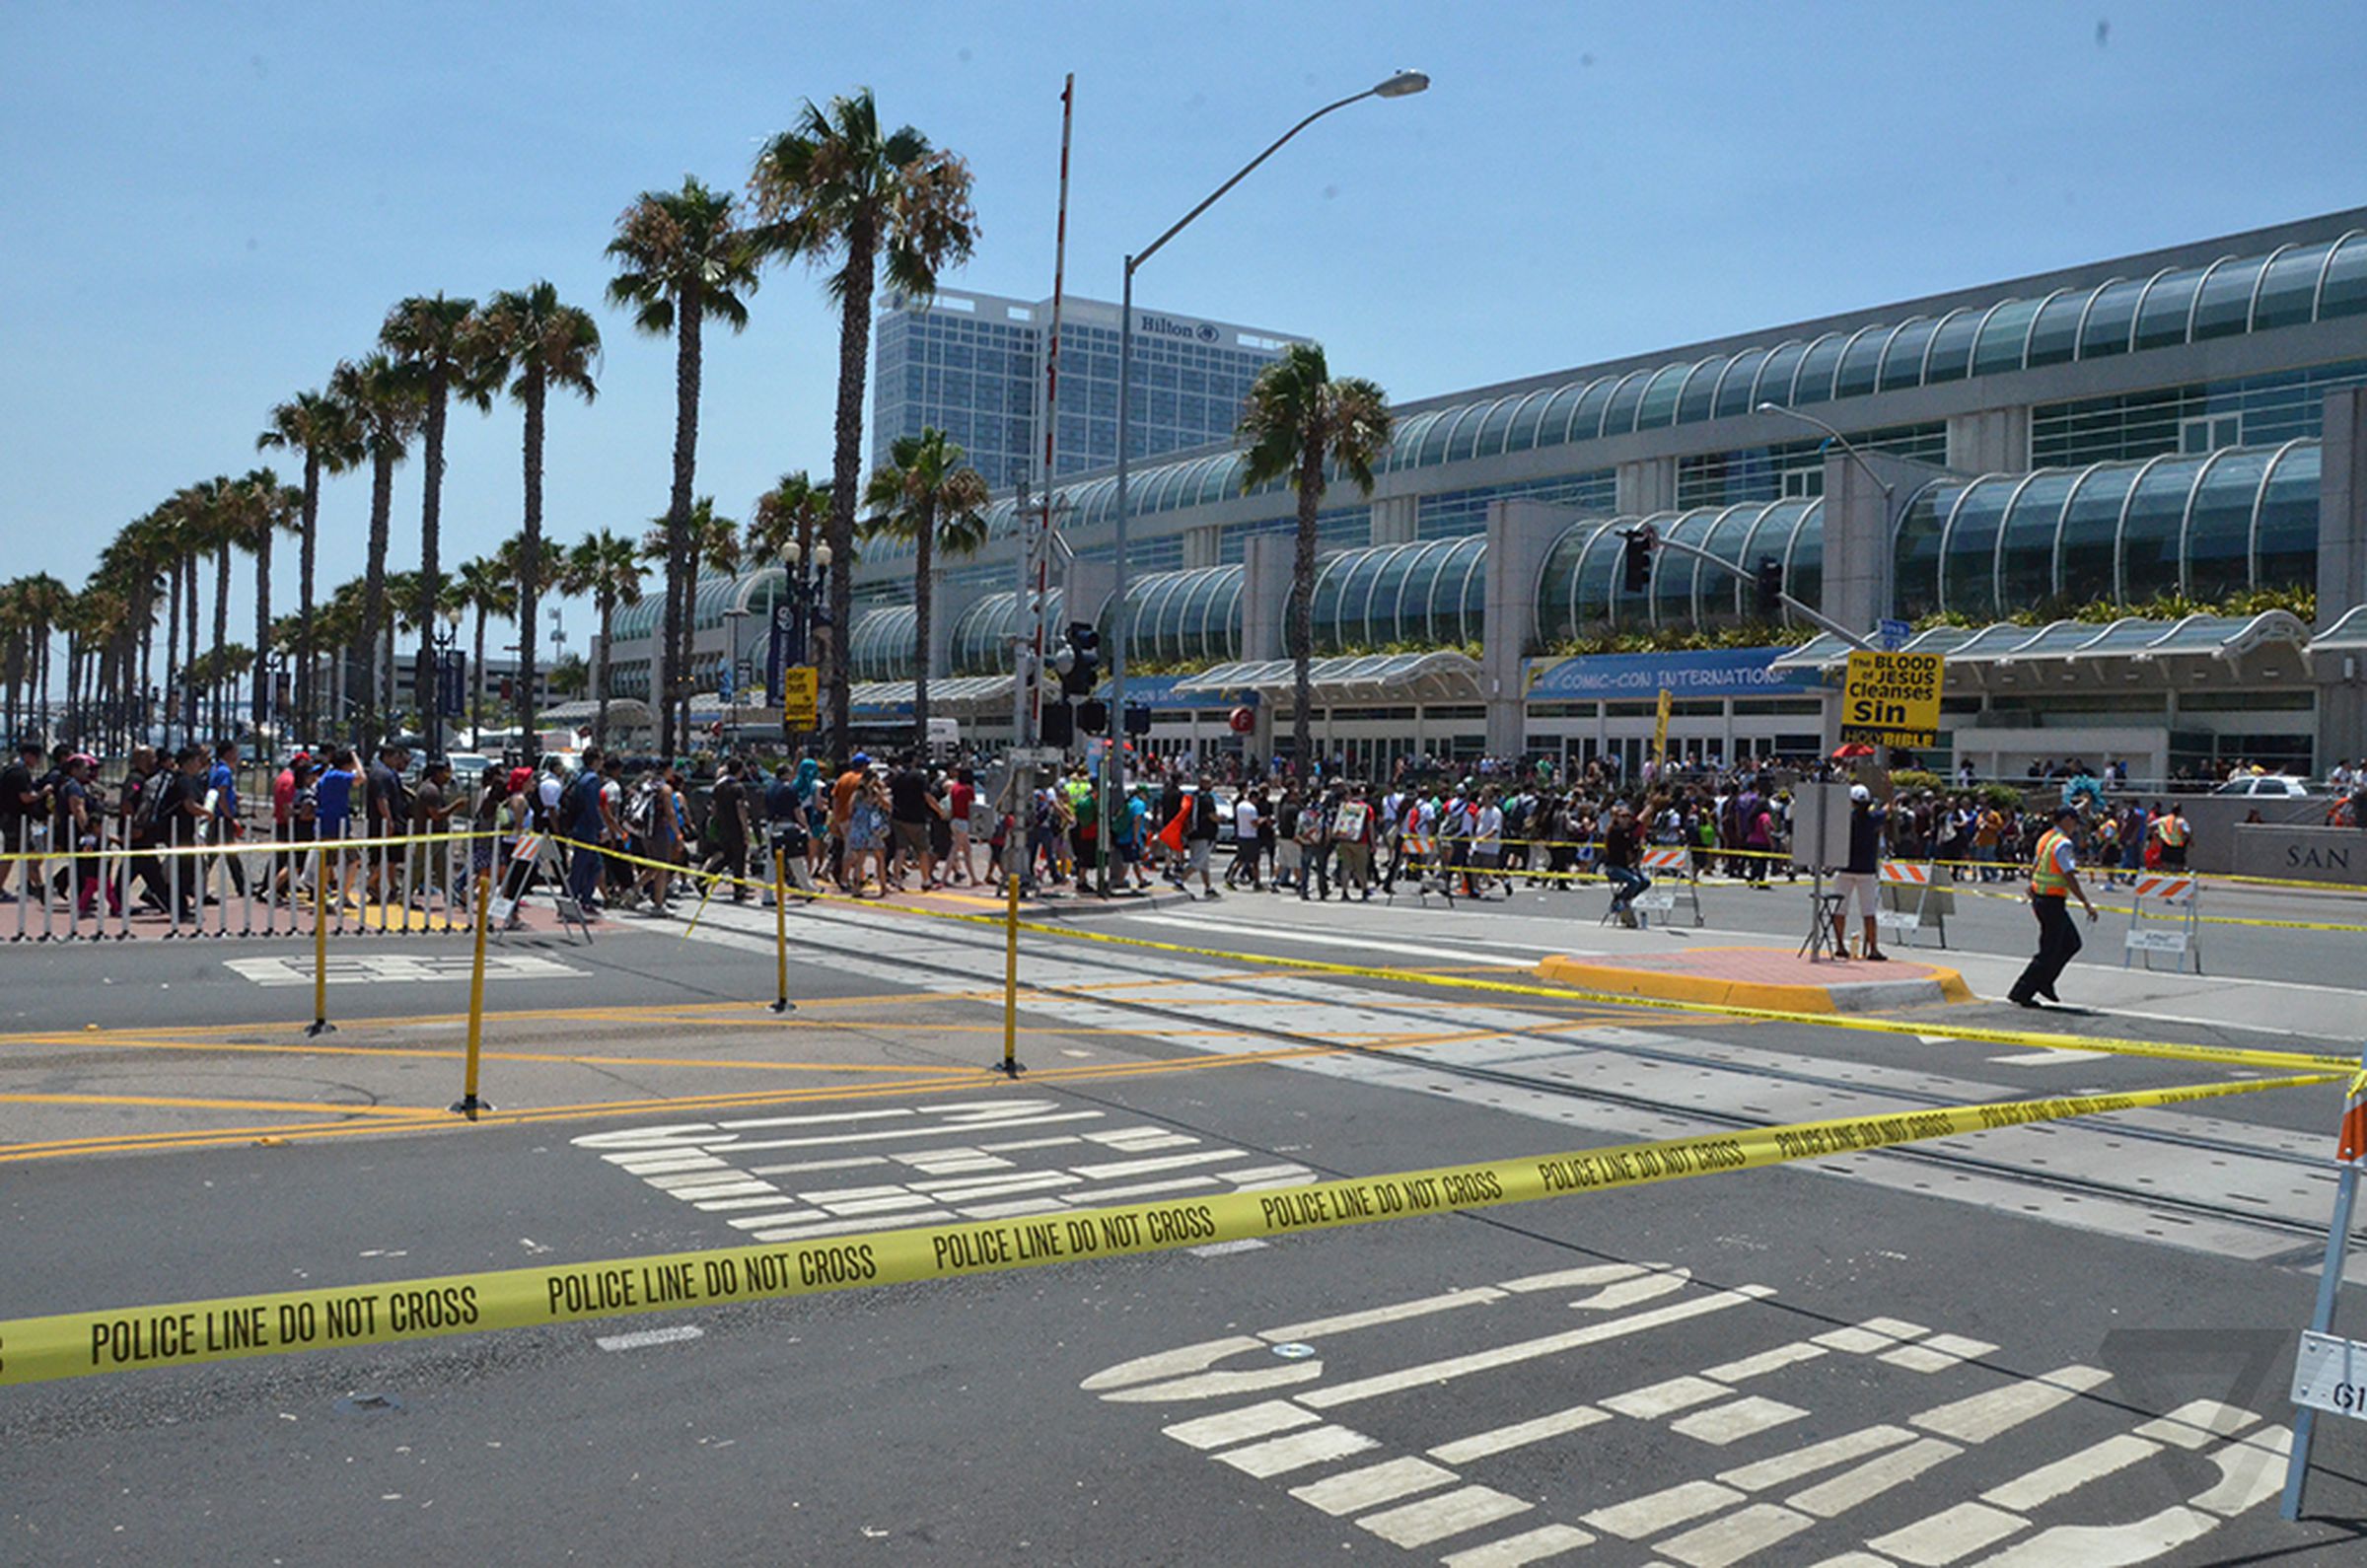 2013 San Diego Comic-Con International: Day One photos